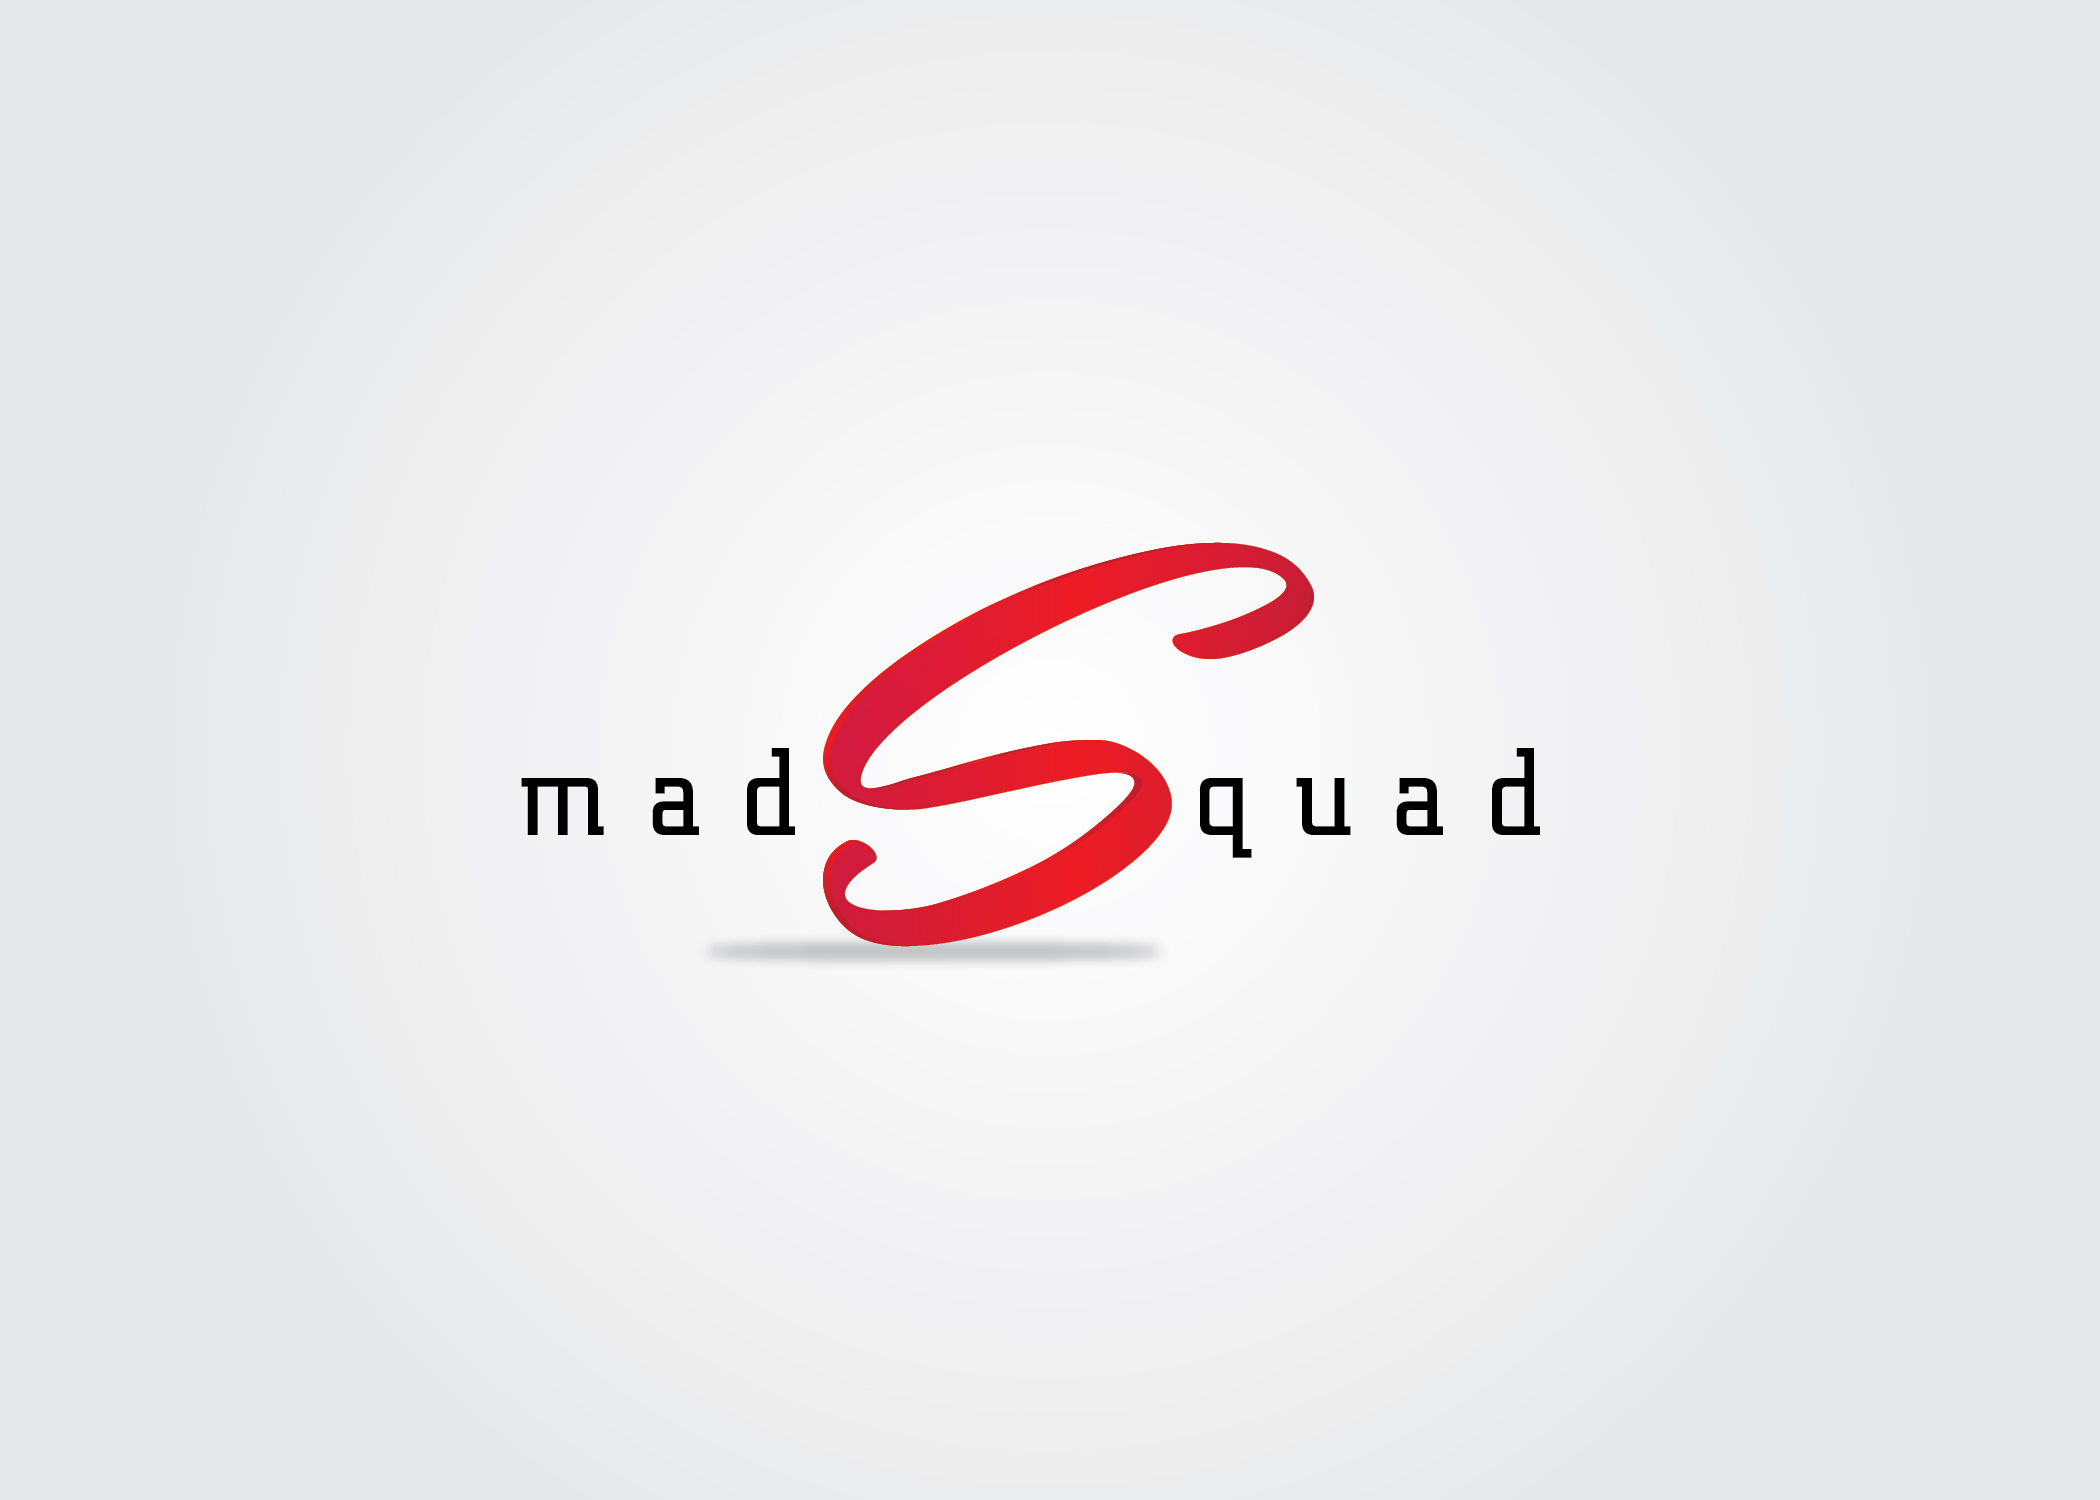 MAD Squad